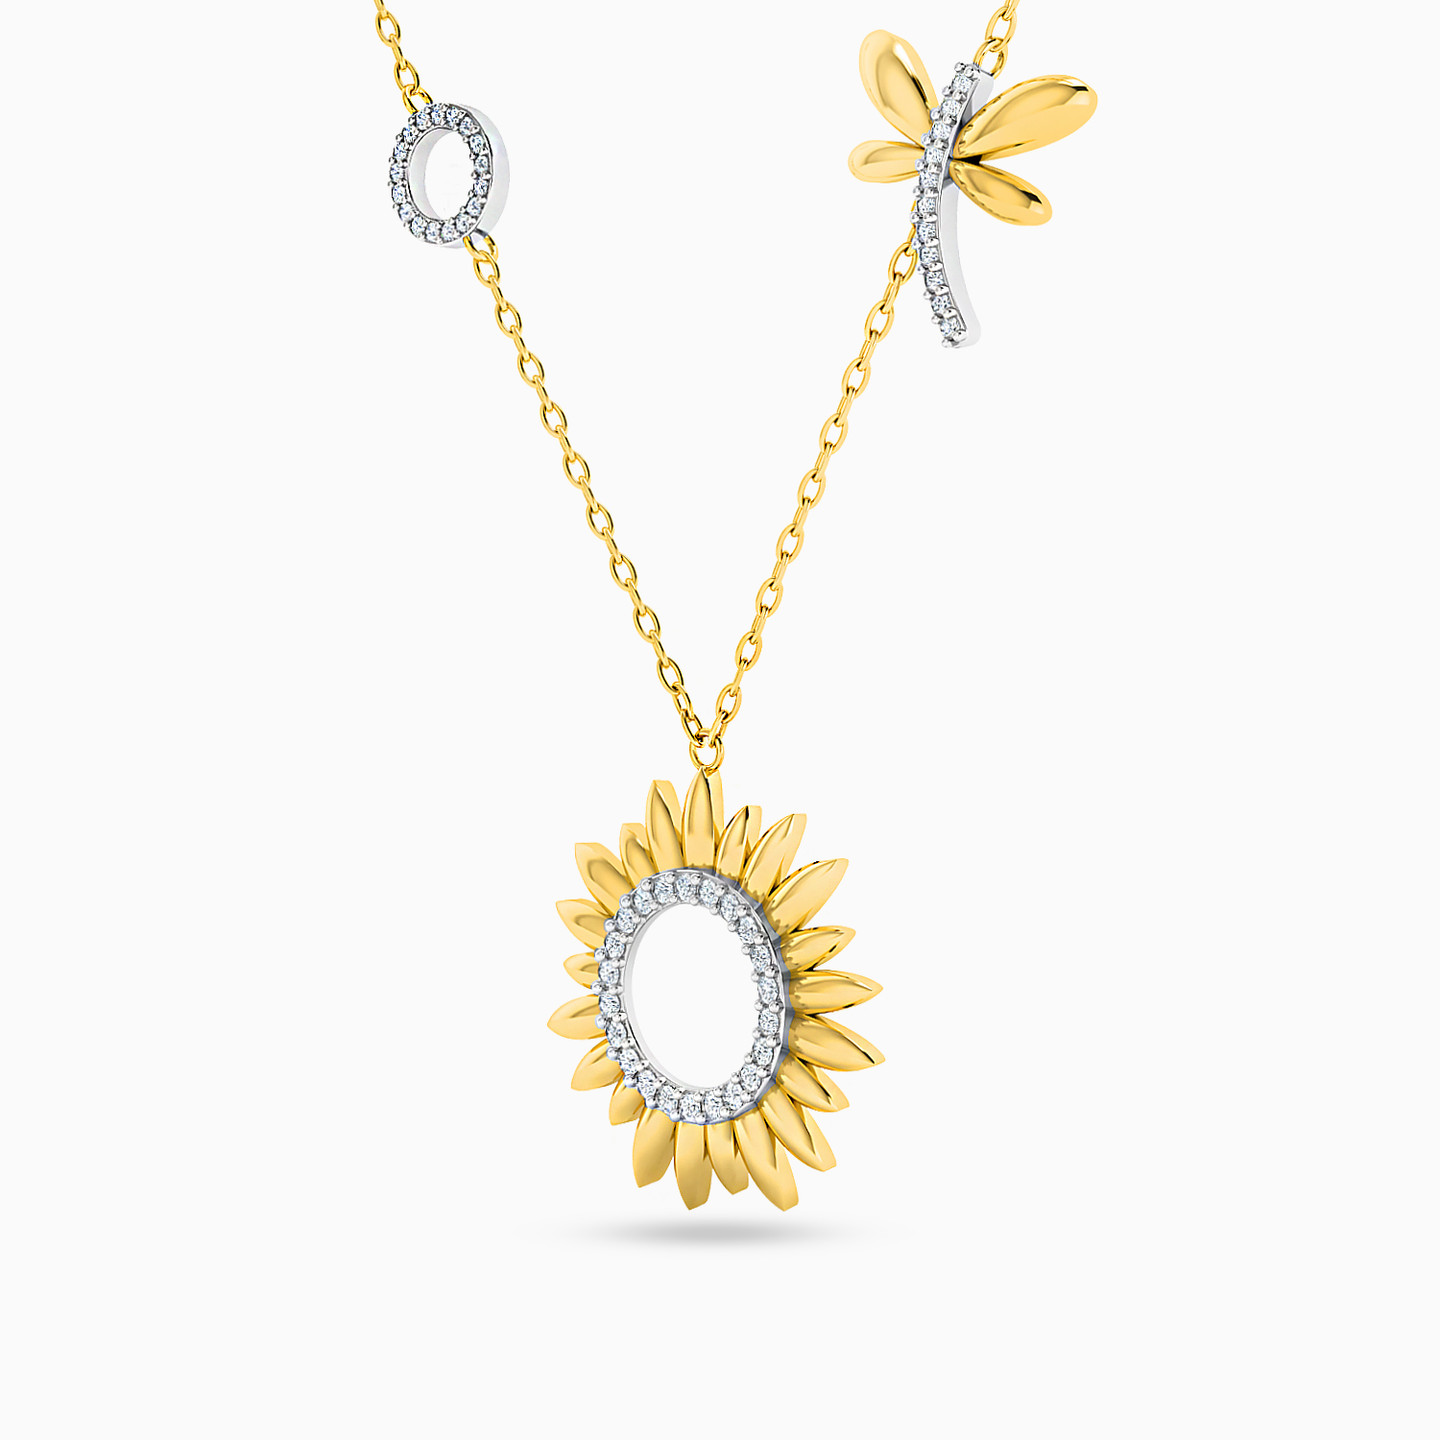 18K Gold Diamond Chain Necklace - 2